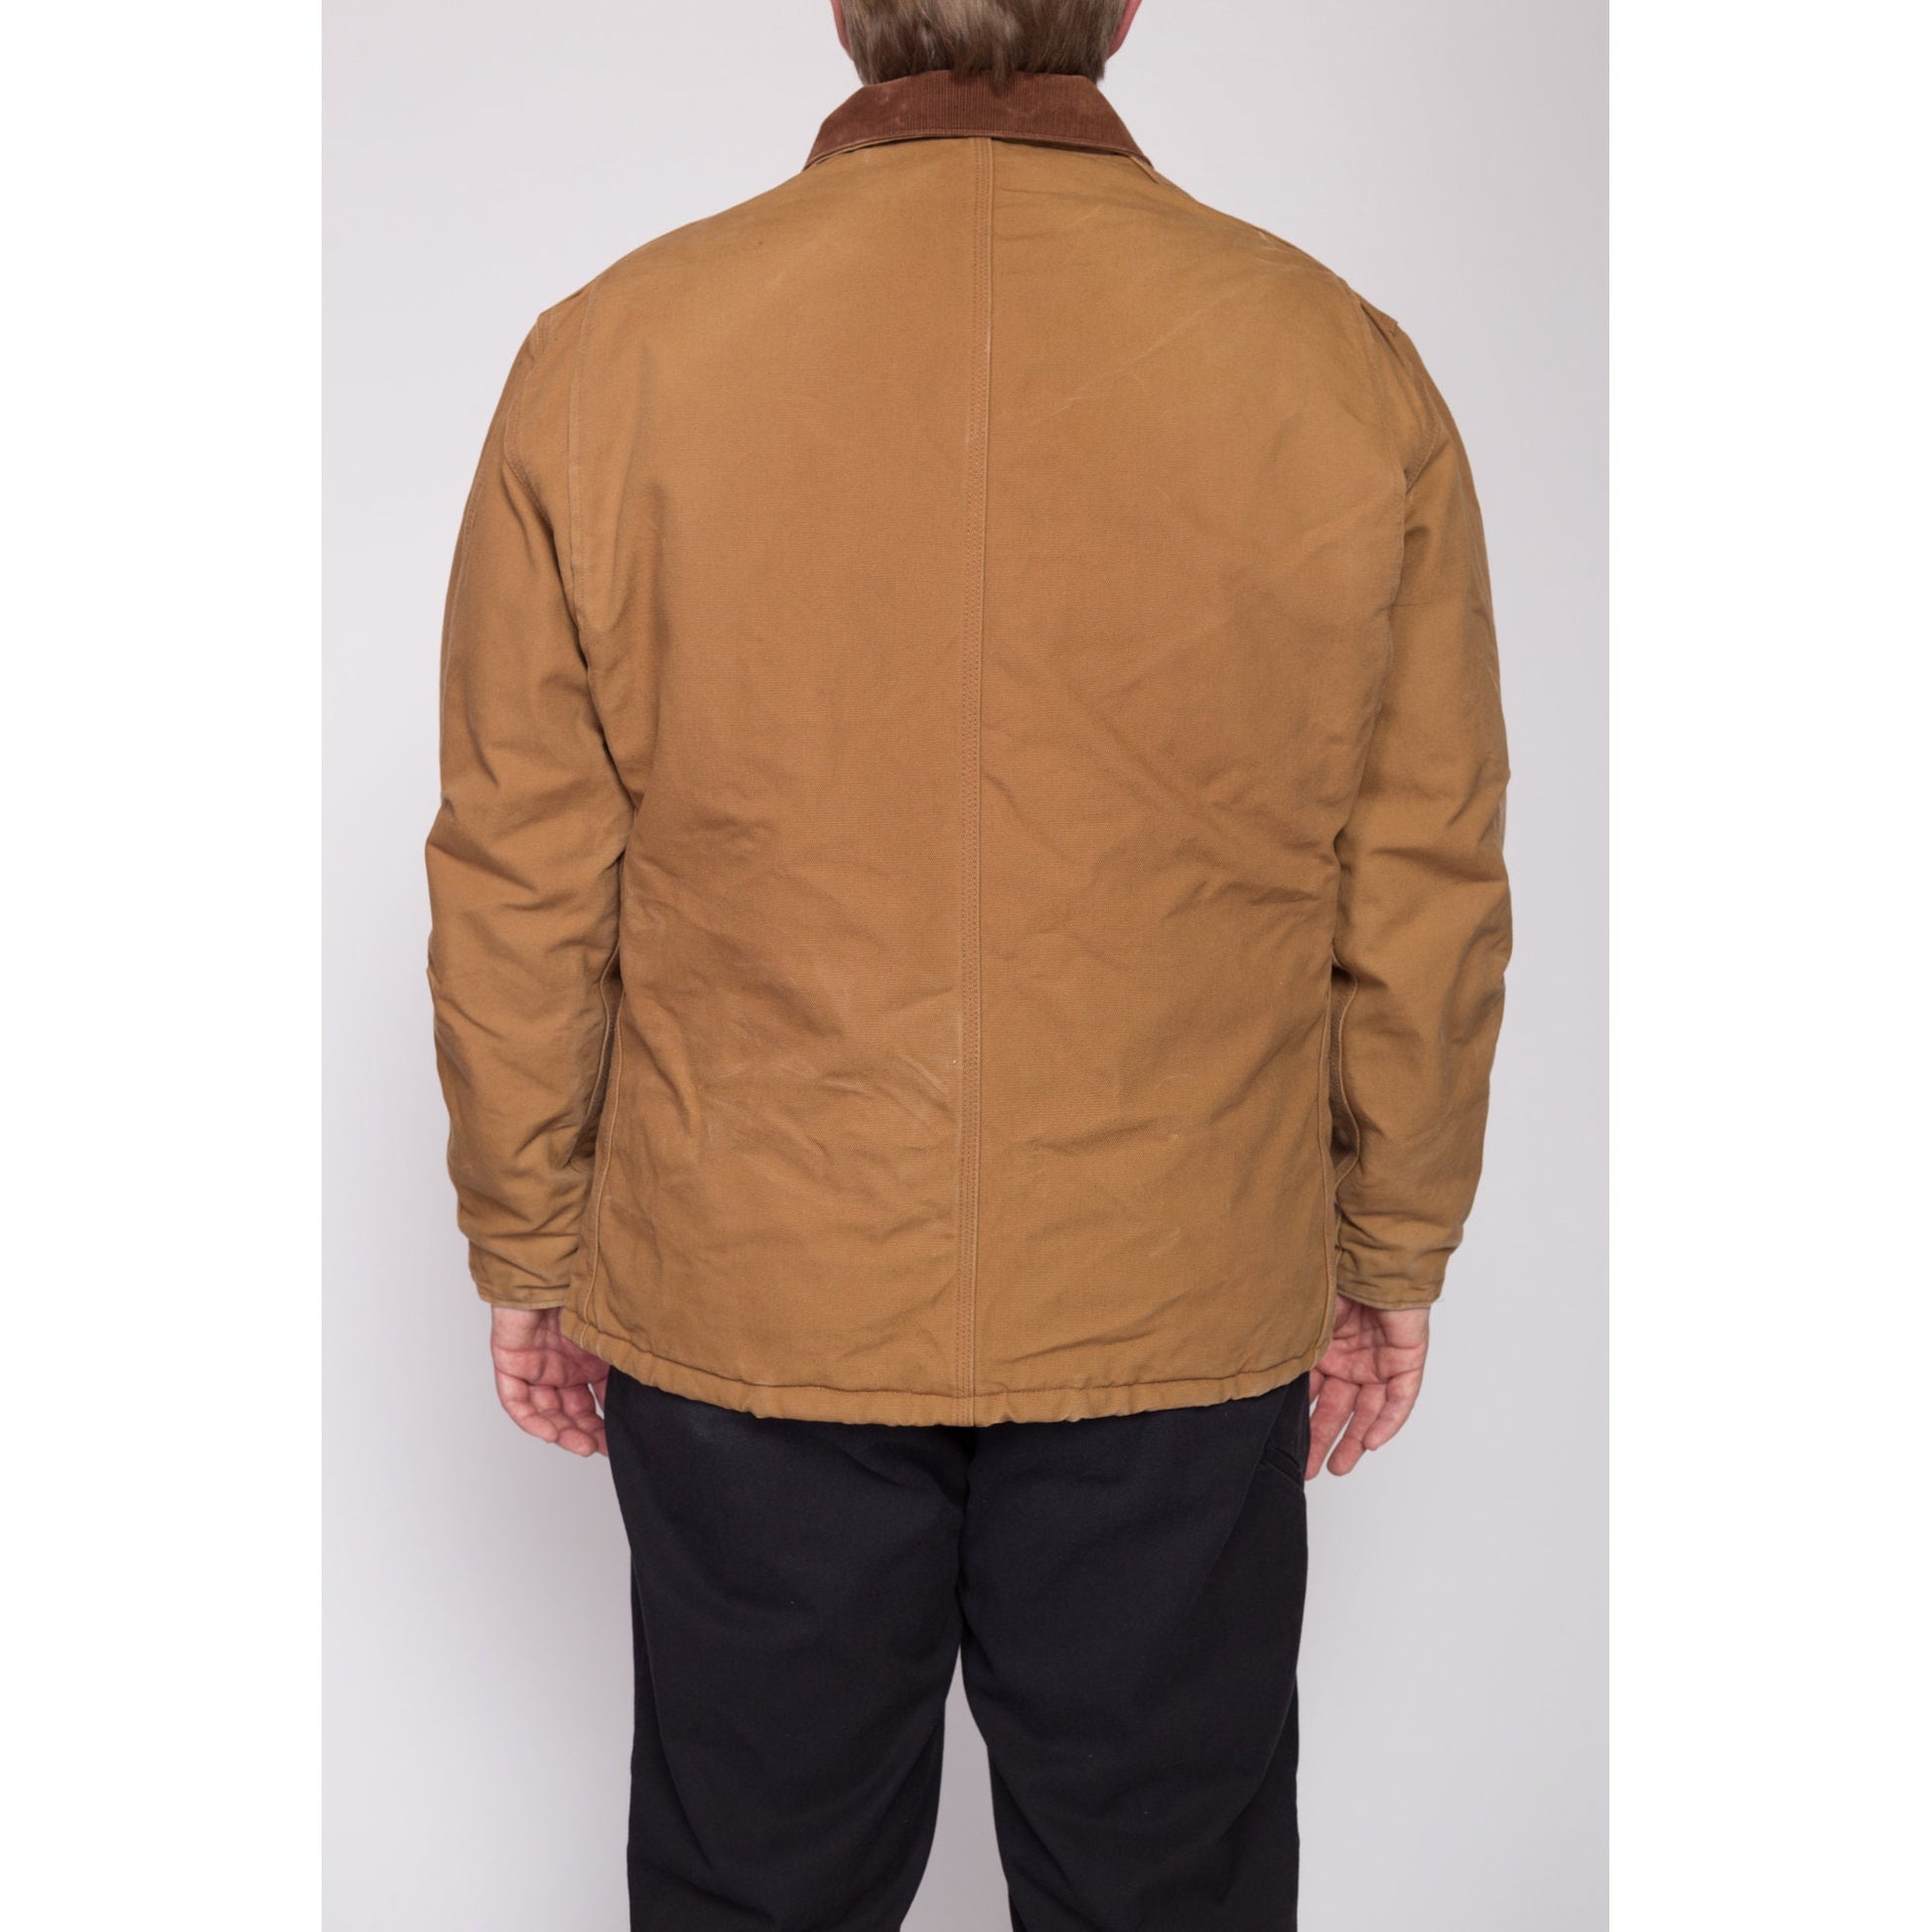 Vintage Carhartt Tan Insulated Arctic Jacket - Size 46 | 90s Duck Canvas Corduroy Collar Workwear Chore Coat